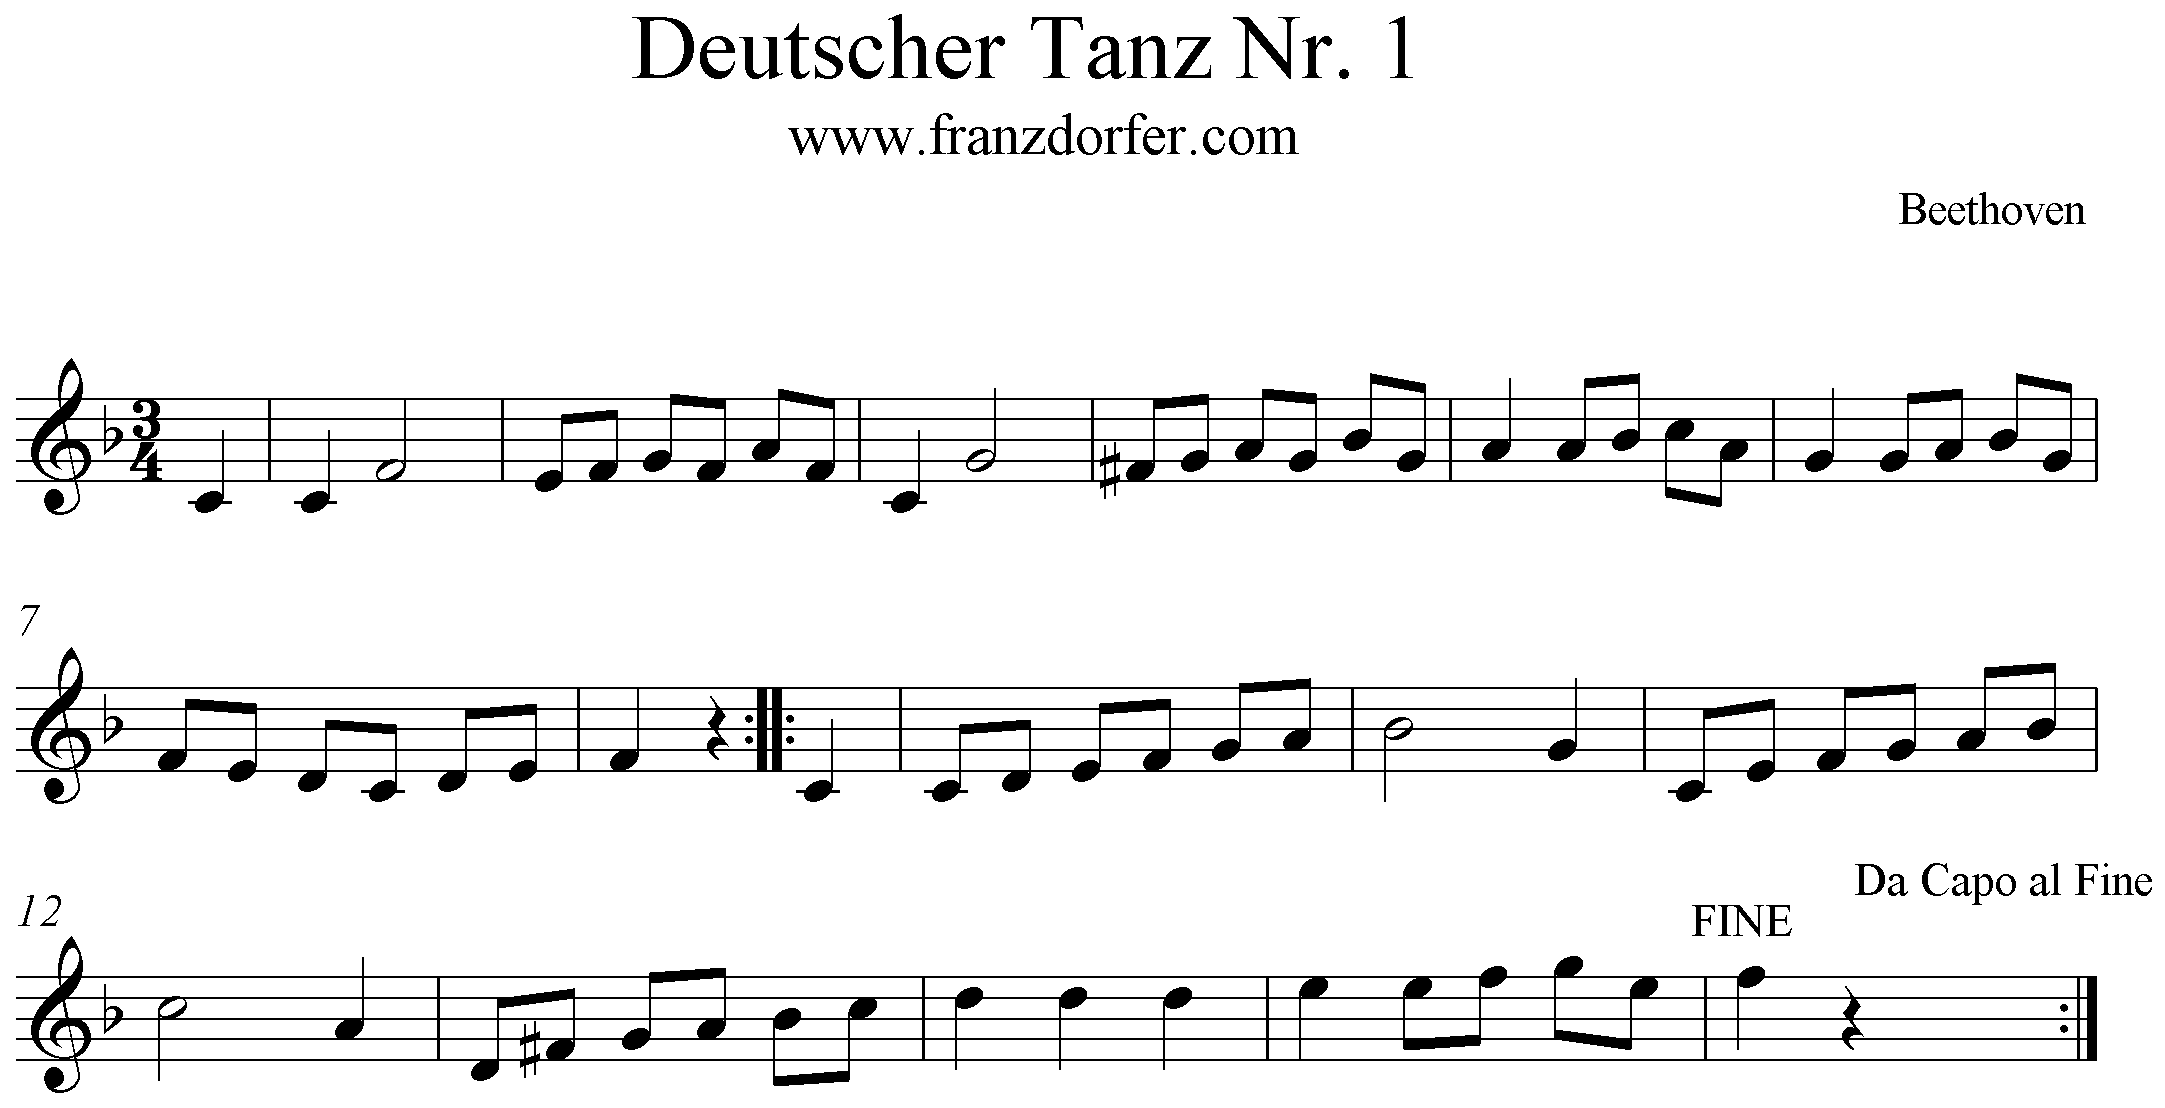 German Dance Nr.1- Deutscher Tanz Nr. 1 Beethoven